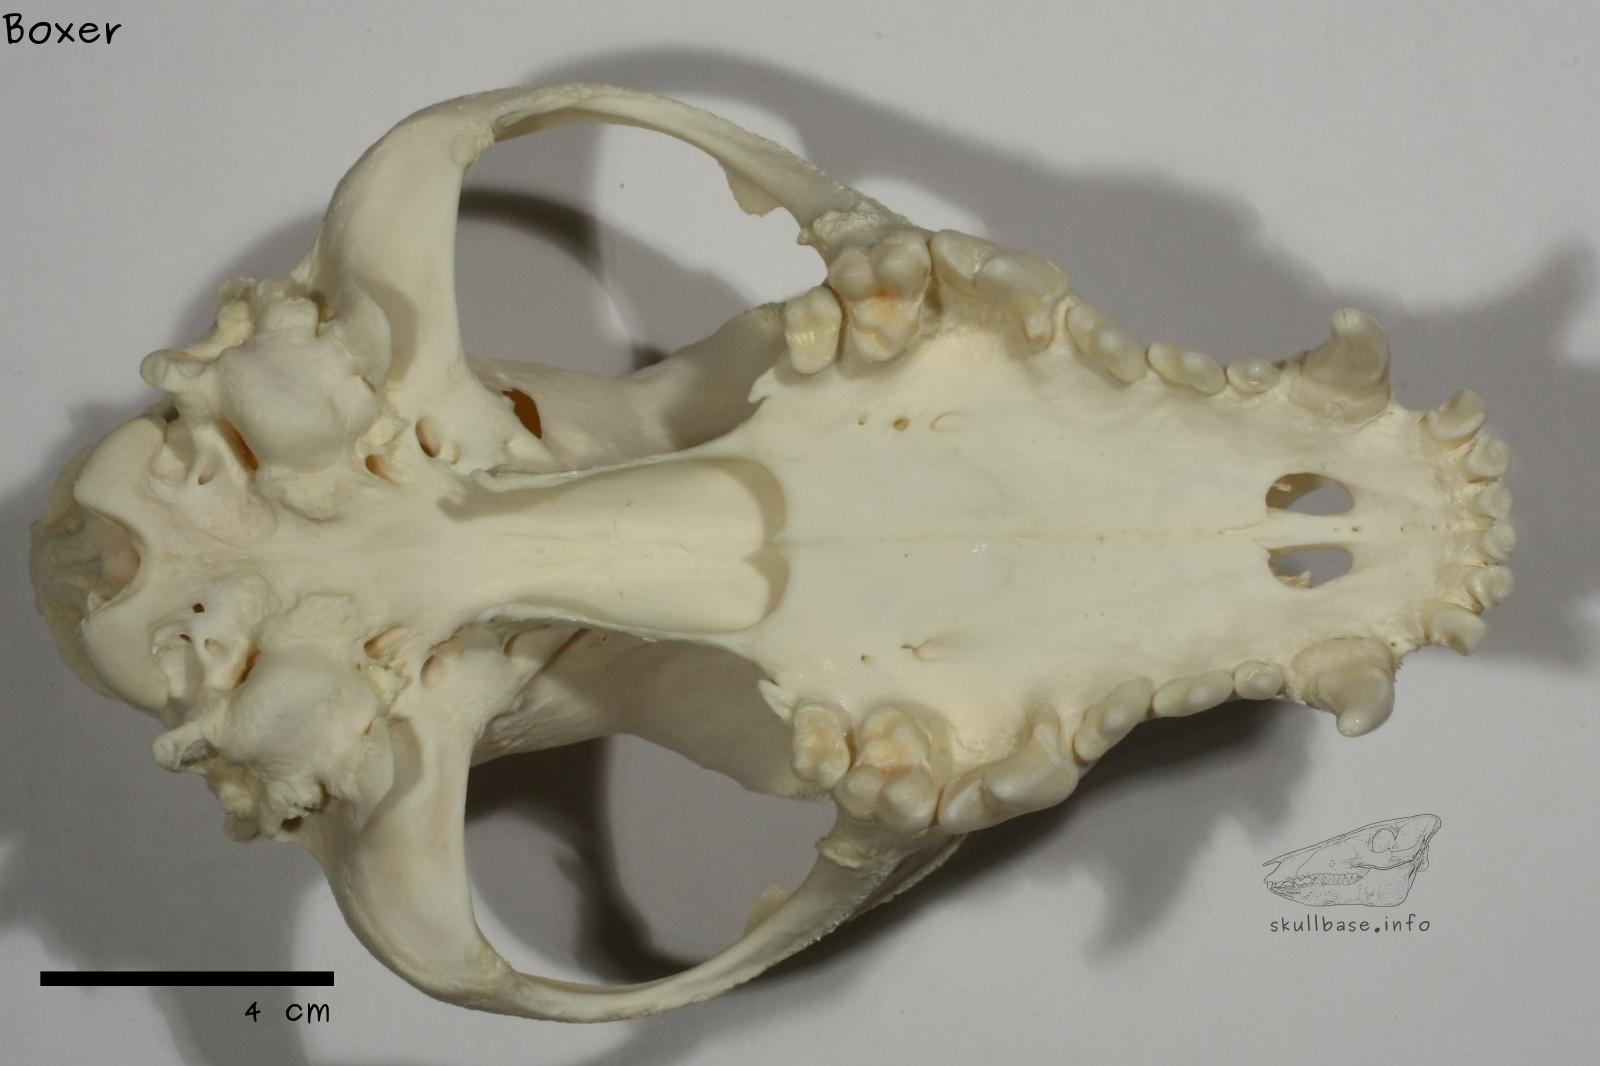 Boxer (Canis lupus familiaris) skull ventral view